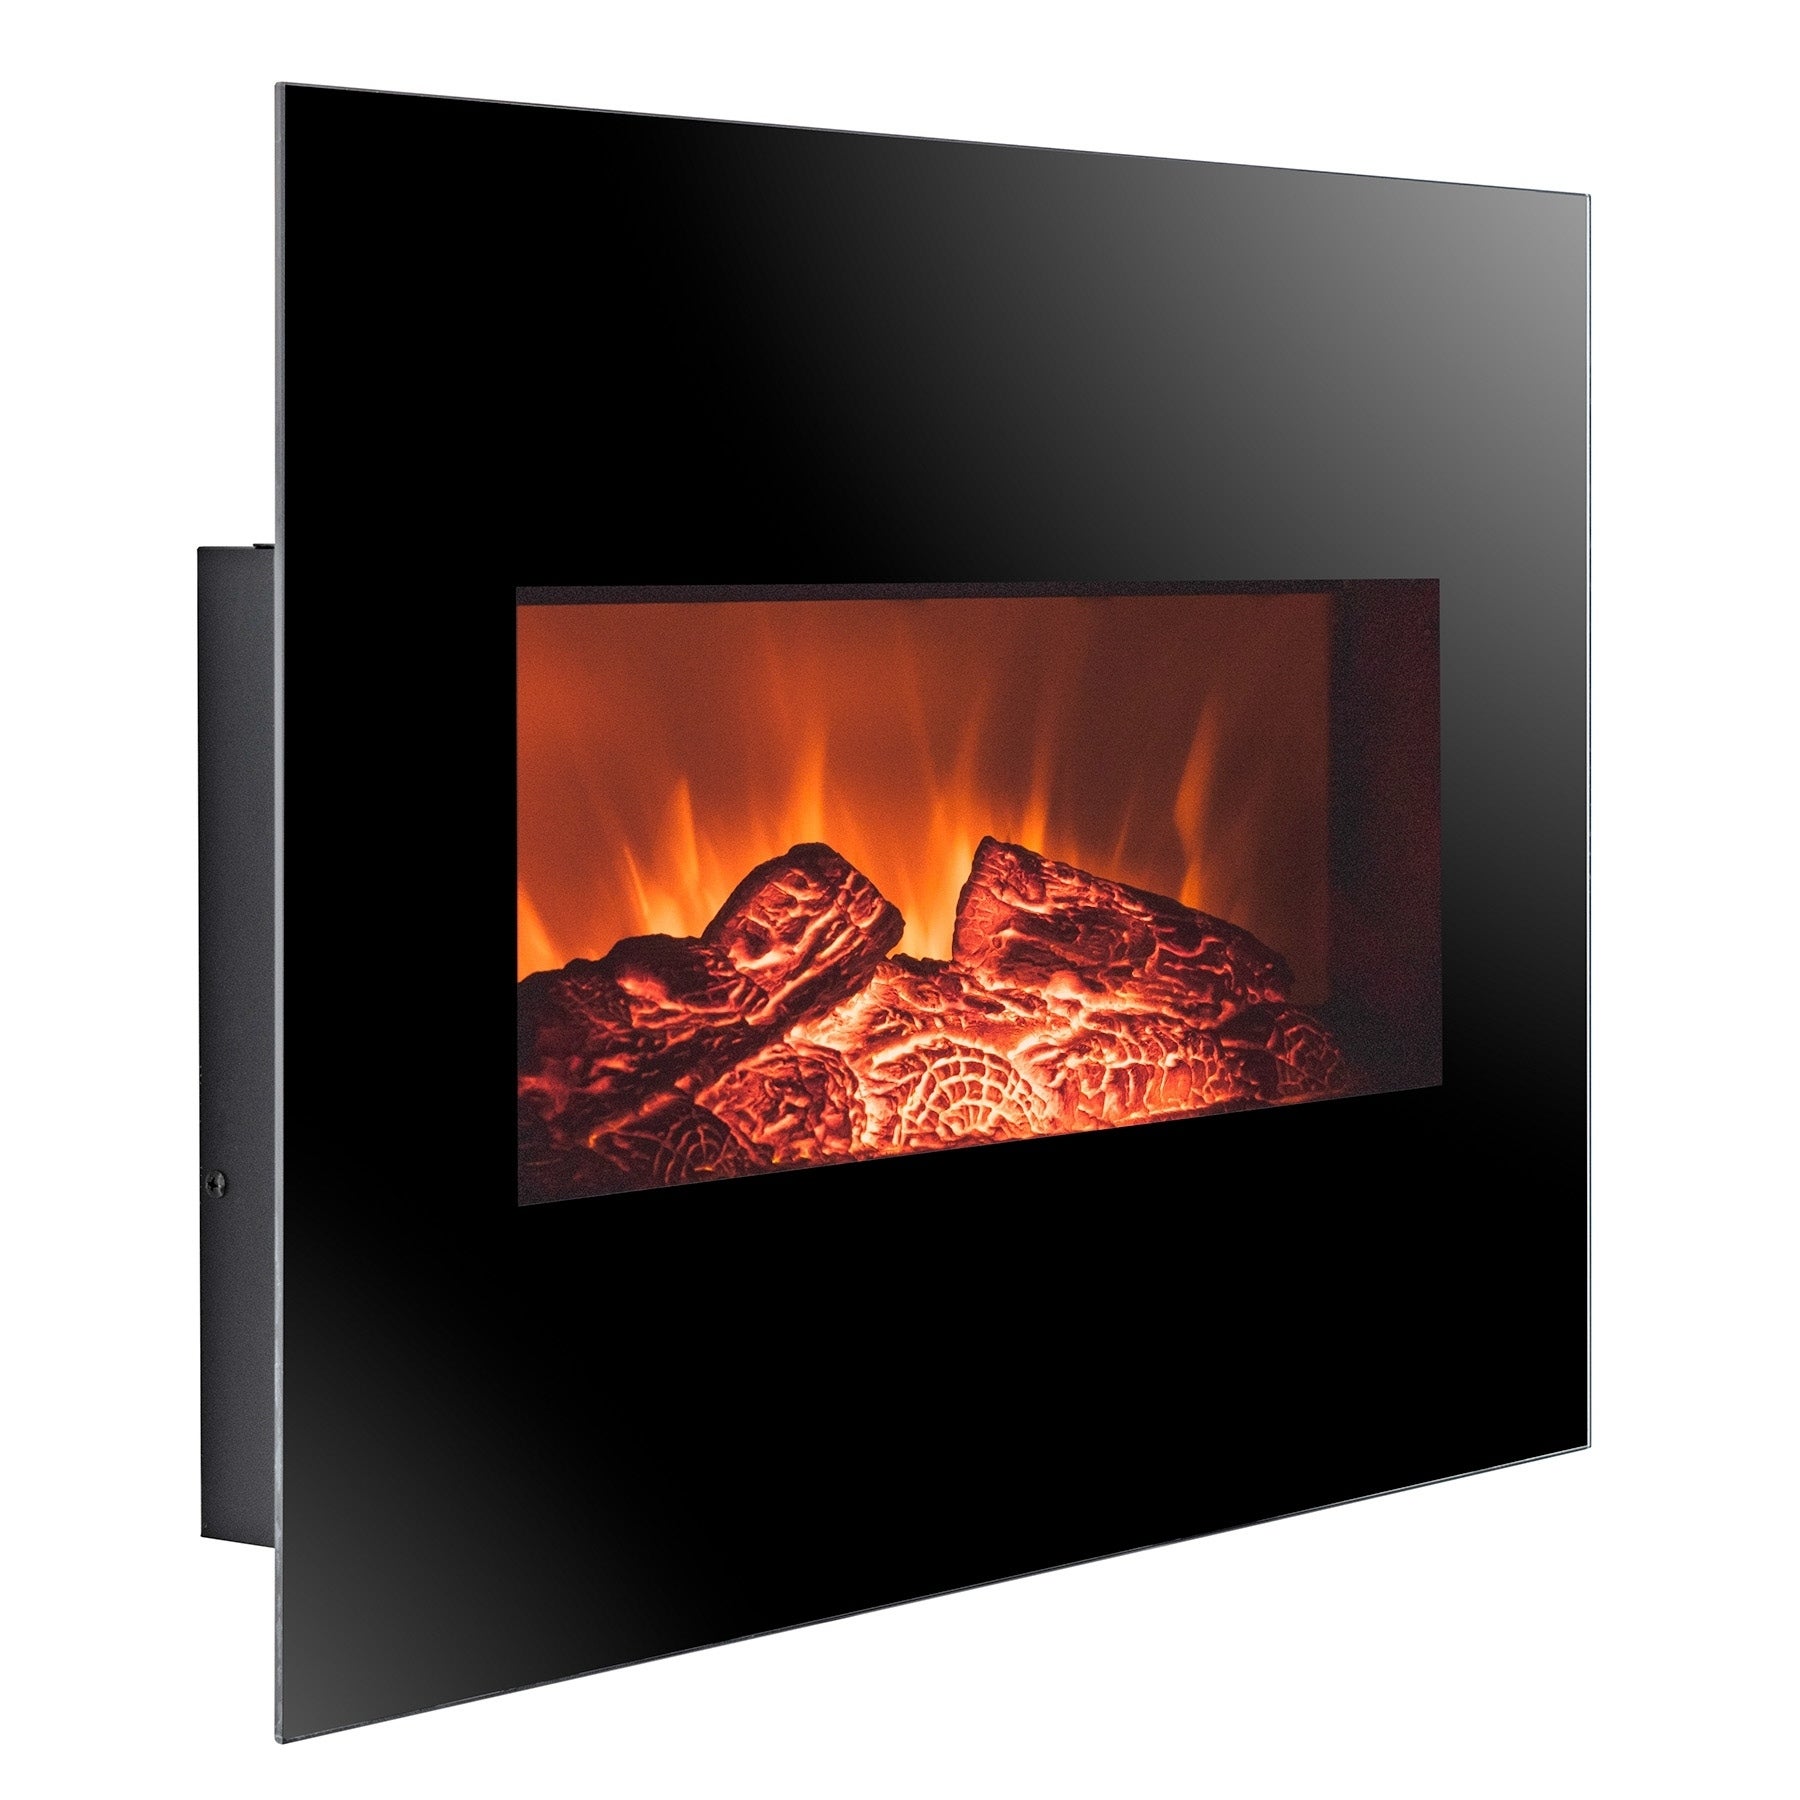 Golden Vantage FP0063 26 Wall Mount Electric Fireplace 3D Flames Firebox w Logs Heater 12f6 4229 b810 f229bad65c62